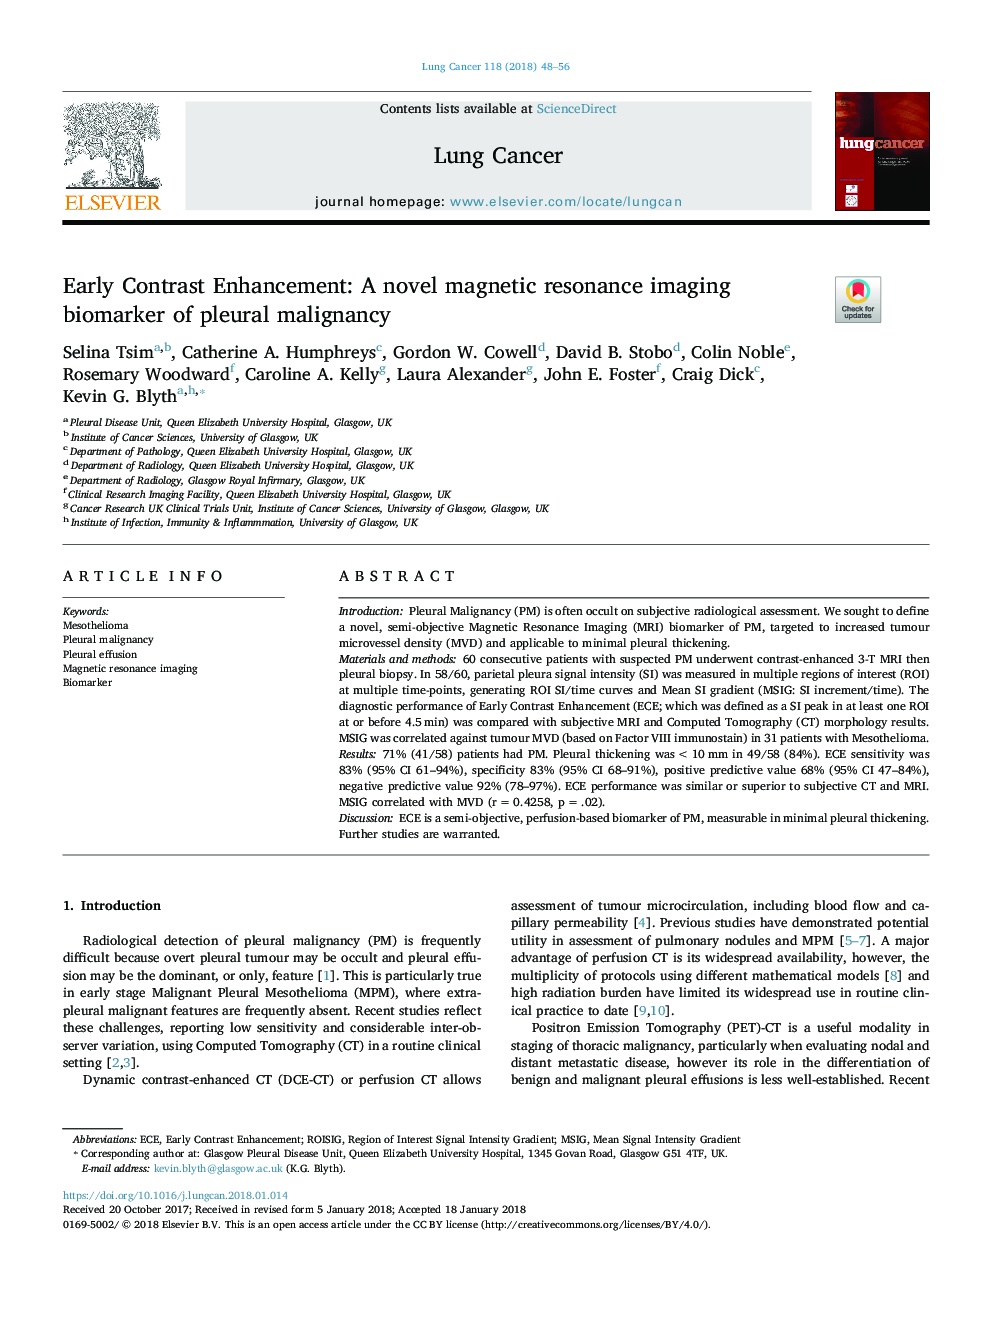 Early Contrast Enhancement: A novel magnetic resonance imaging biomarker of pleural malignancy